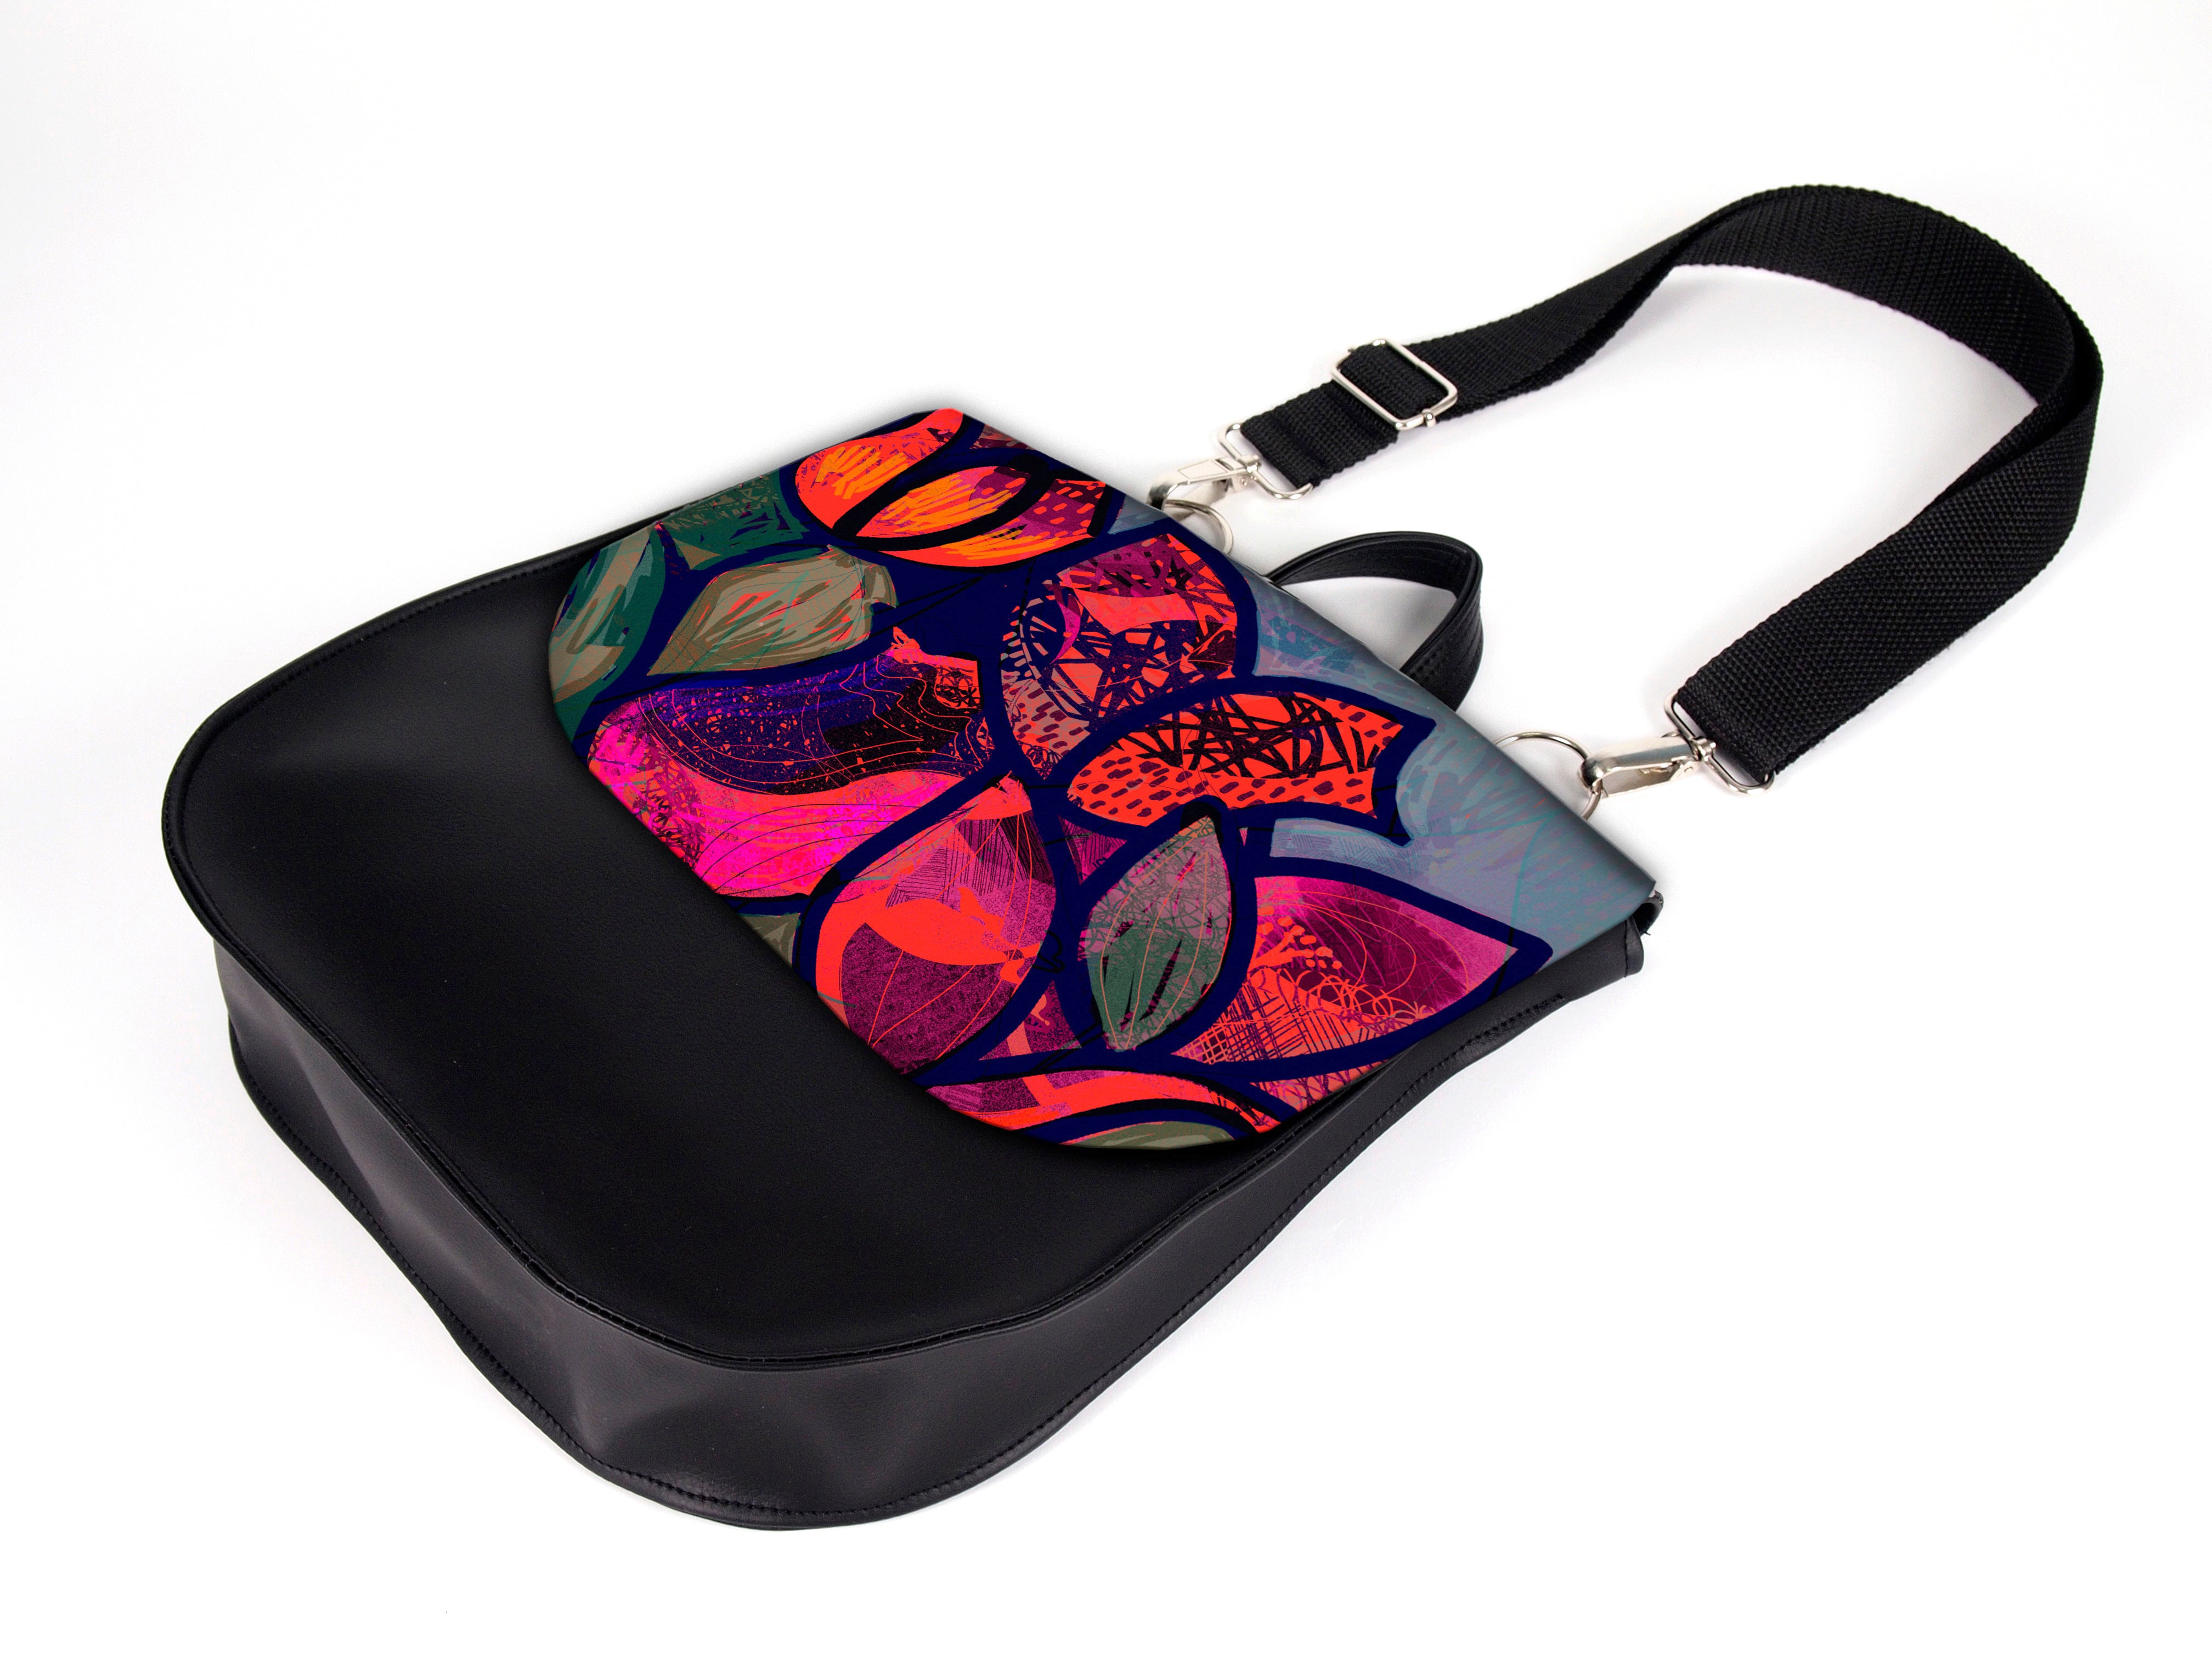 Bardo backpack&bag - Garden - Premium bardo backpack&bag from BARDO ART WORKS - Just lvart bag, backpack, bag, black, floral, flowers, gift, green, handemade, messenger, nature, purple, red, urban style, vegan leather, woman85.00! Shop now at BARDO ART WORKS